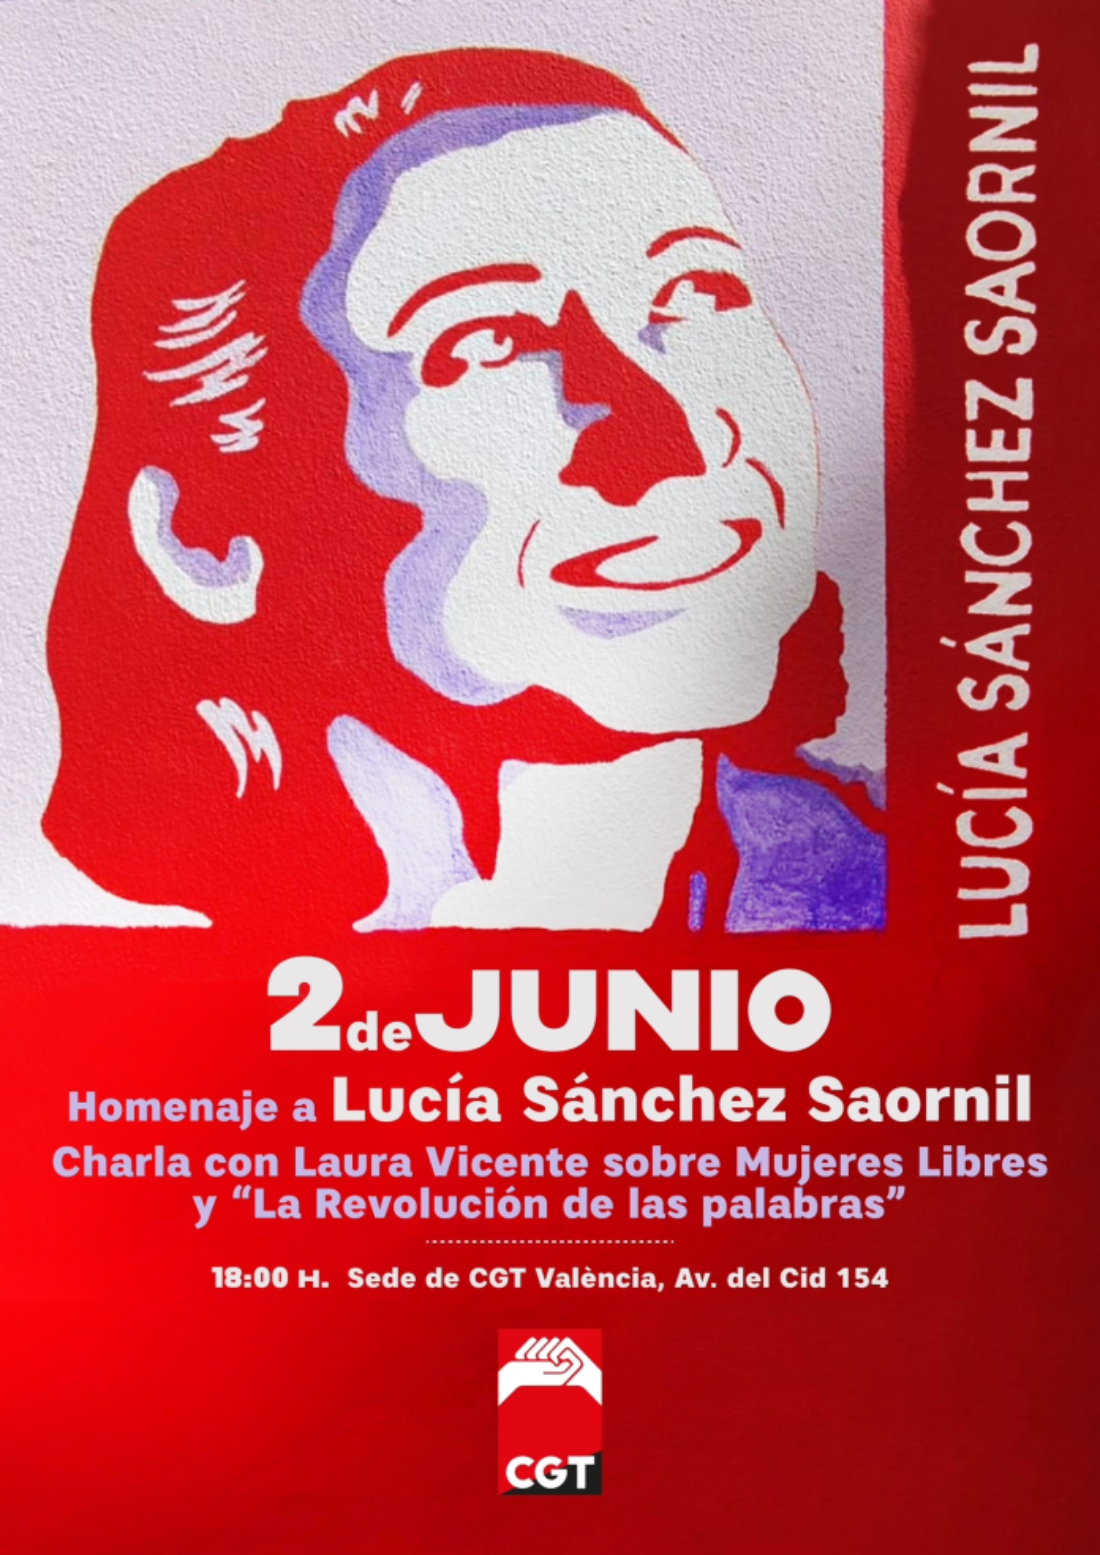 Homenatge a Lucía Sánchez Saornil